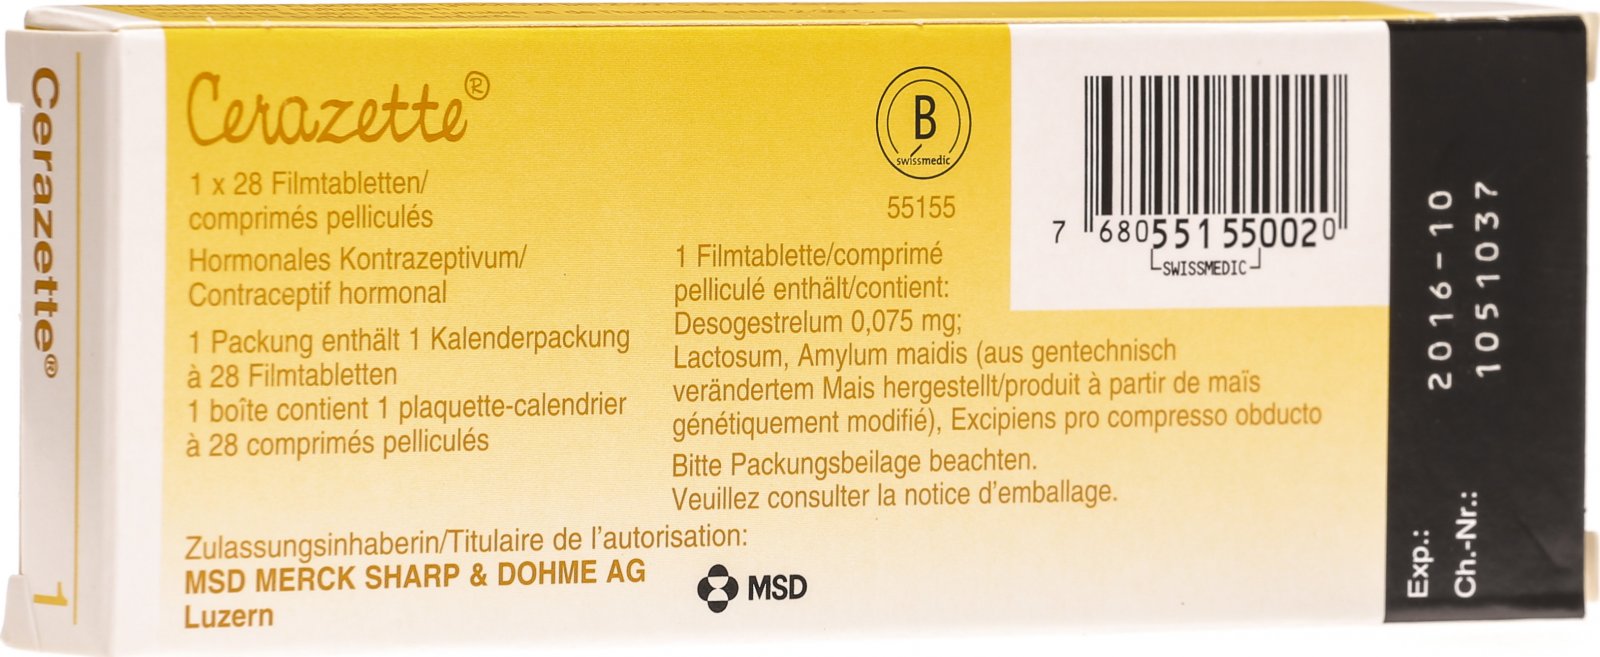 Cerazette 28 Tabletten In Der Adler Apotheke